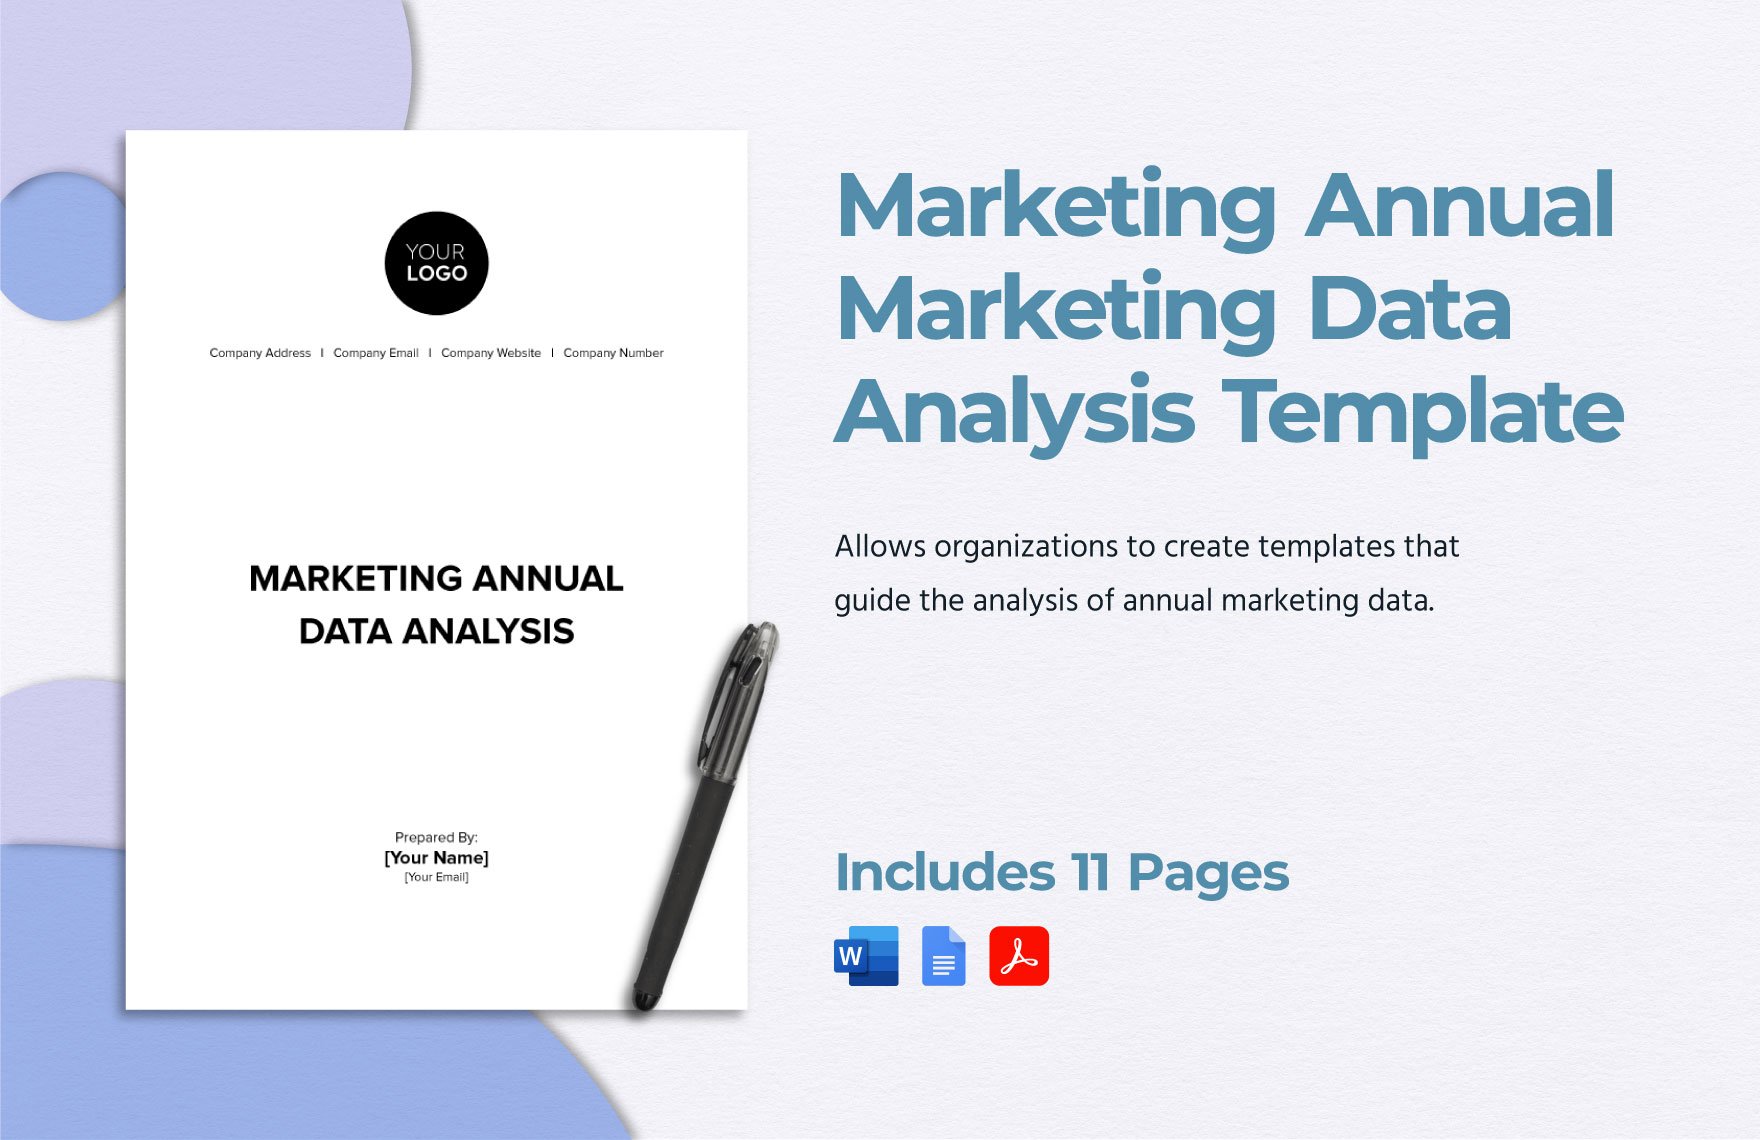 Marketing Annual Marketing Data Analysis Template